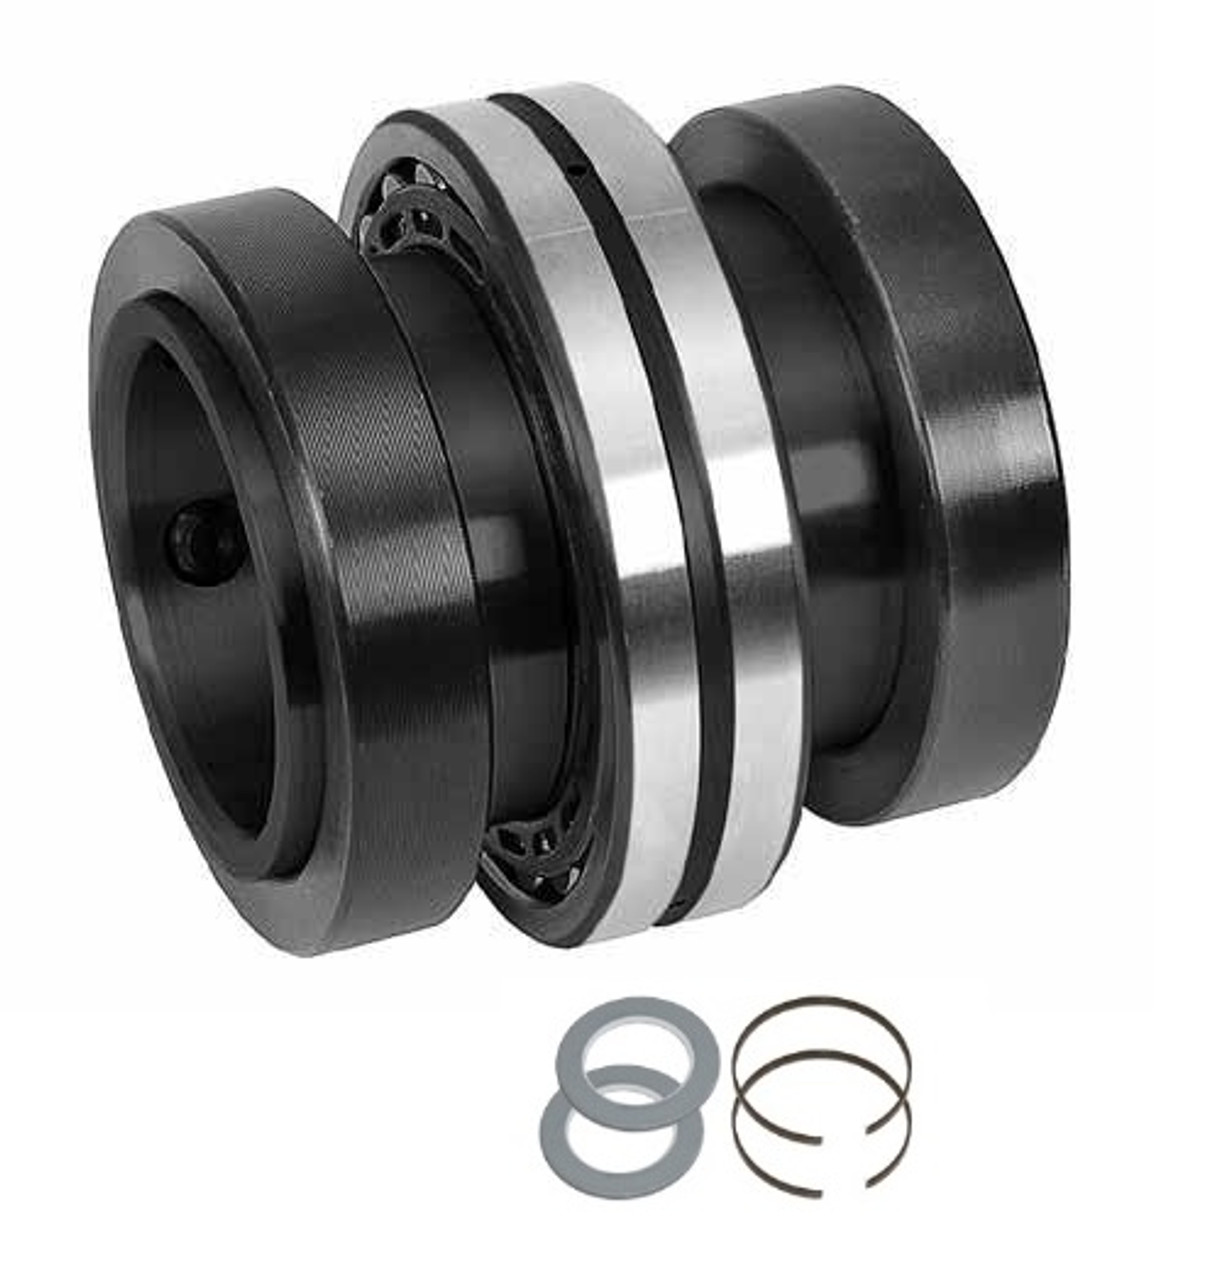 5" Timken QAA Replacement Bearing & Seal Kit - Two Concentric Shaft Collars - Teflon Labyrinth Seals  QAA500KITST